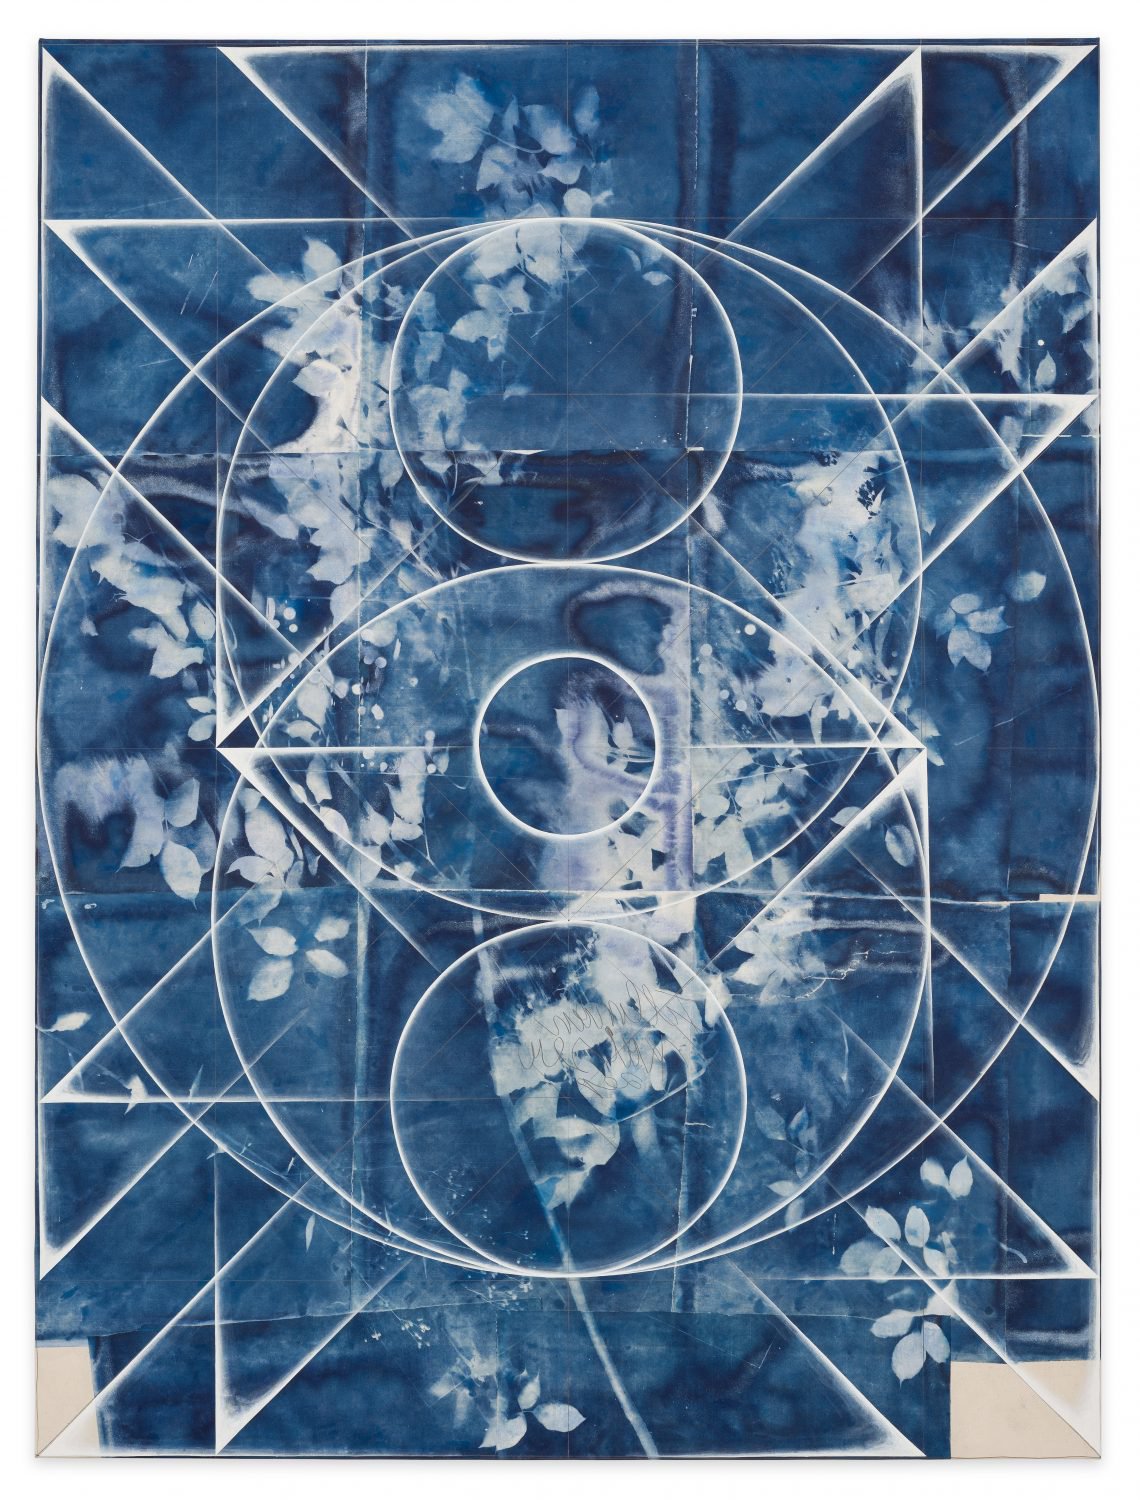 Tillman KaiserUntitled, 2019Cyanotype and acrylic paint on paper on canvas200 x 150 cm